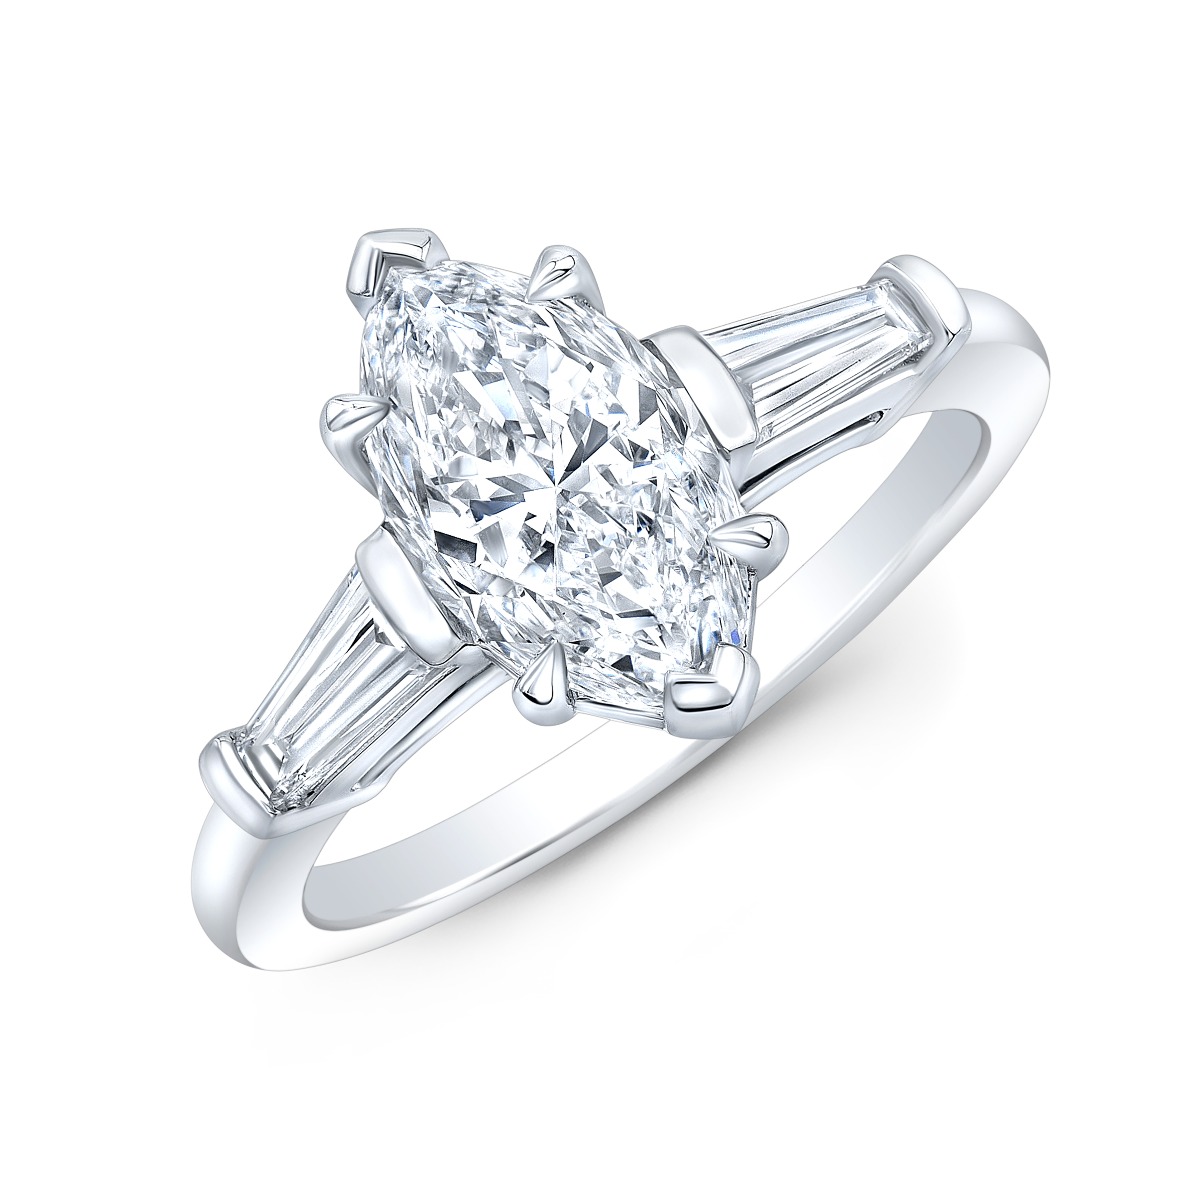 Baguettes Sides Diamond Engagement Ring